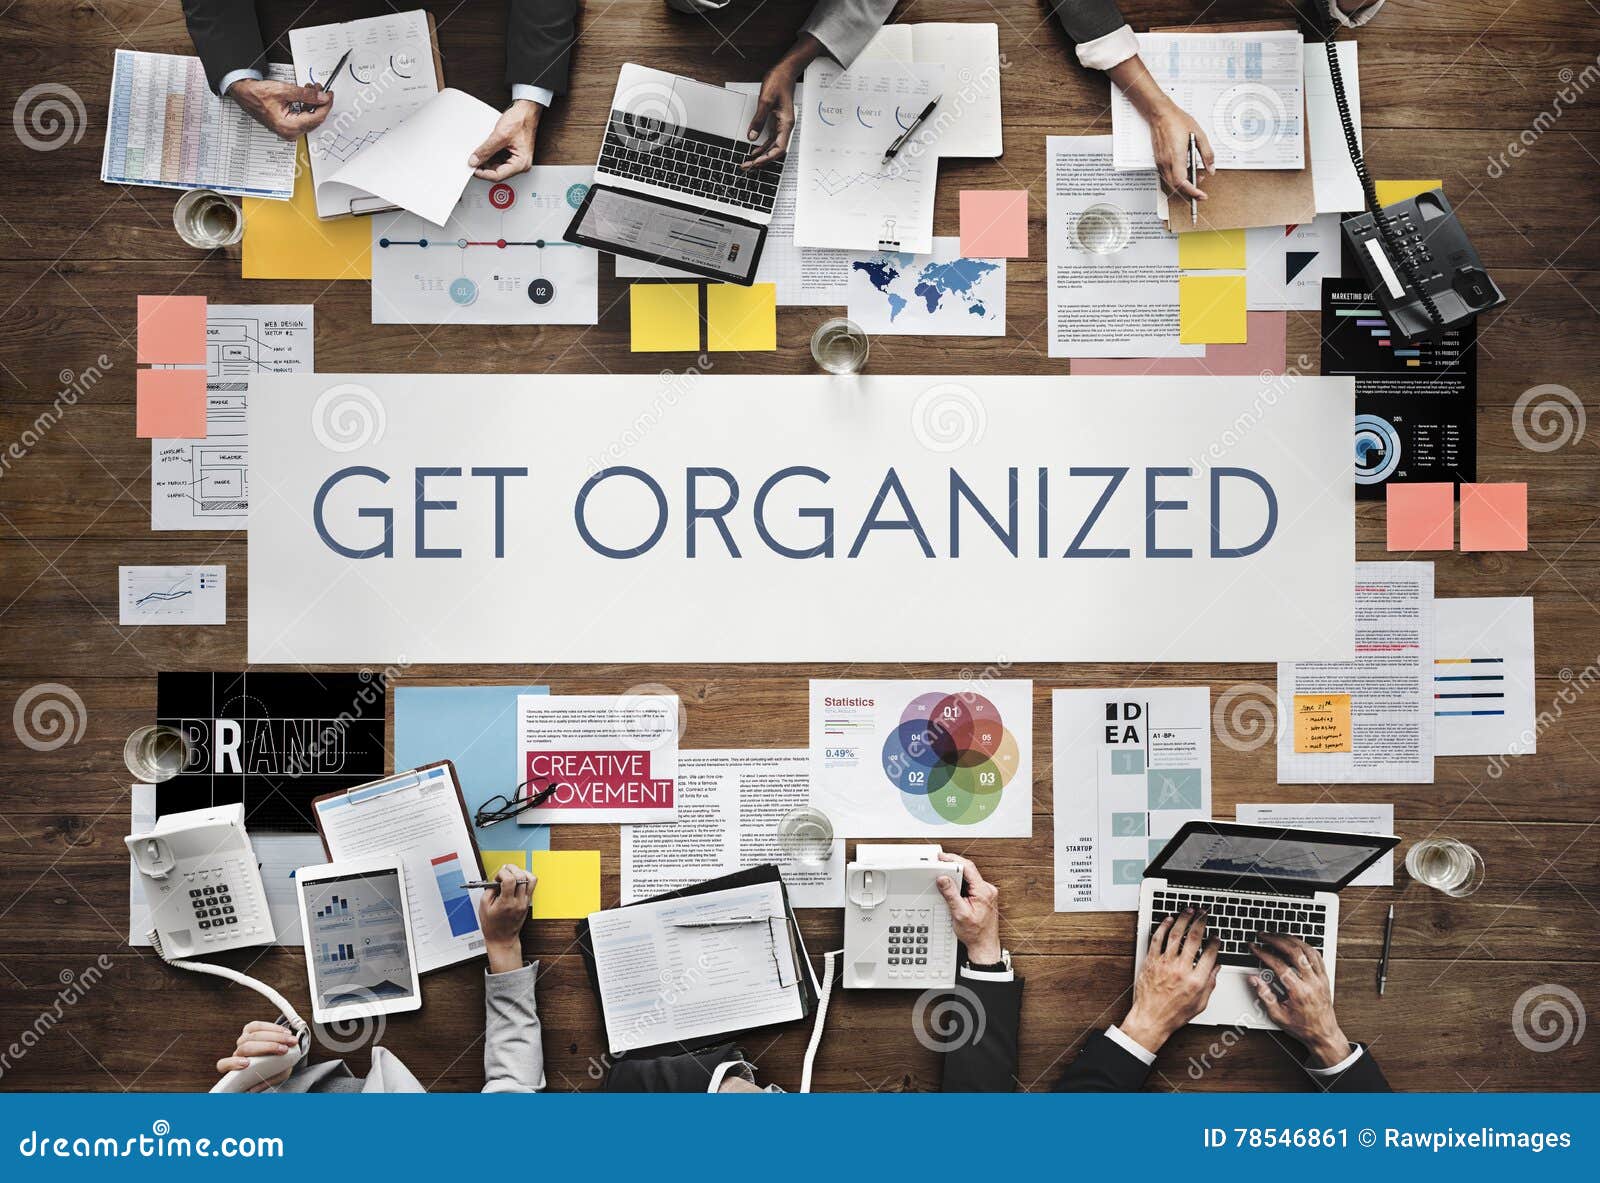 get organized management planning concept